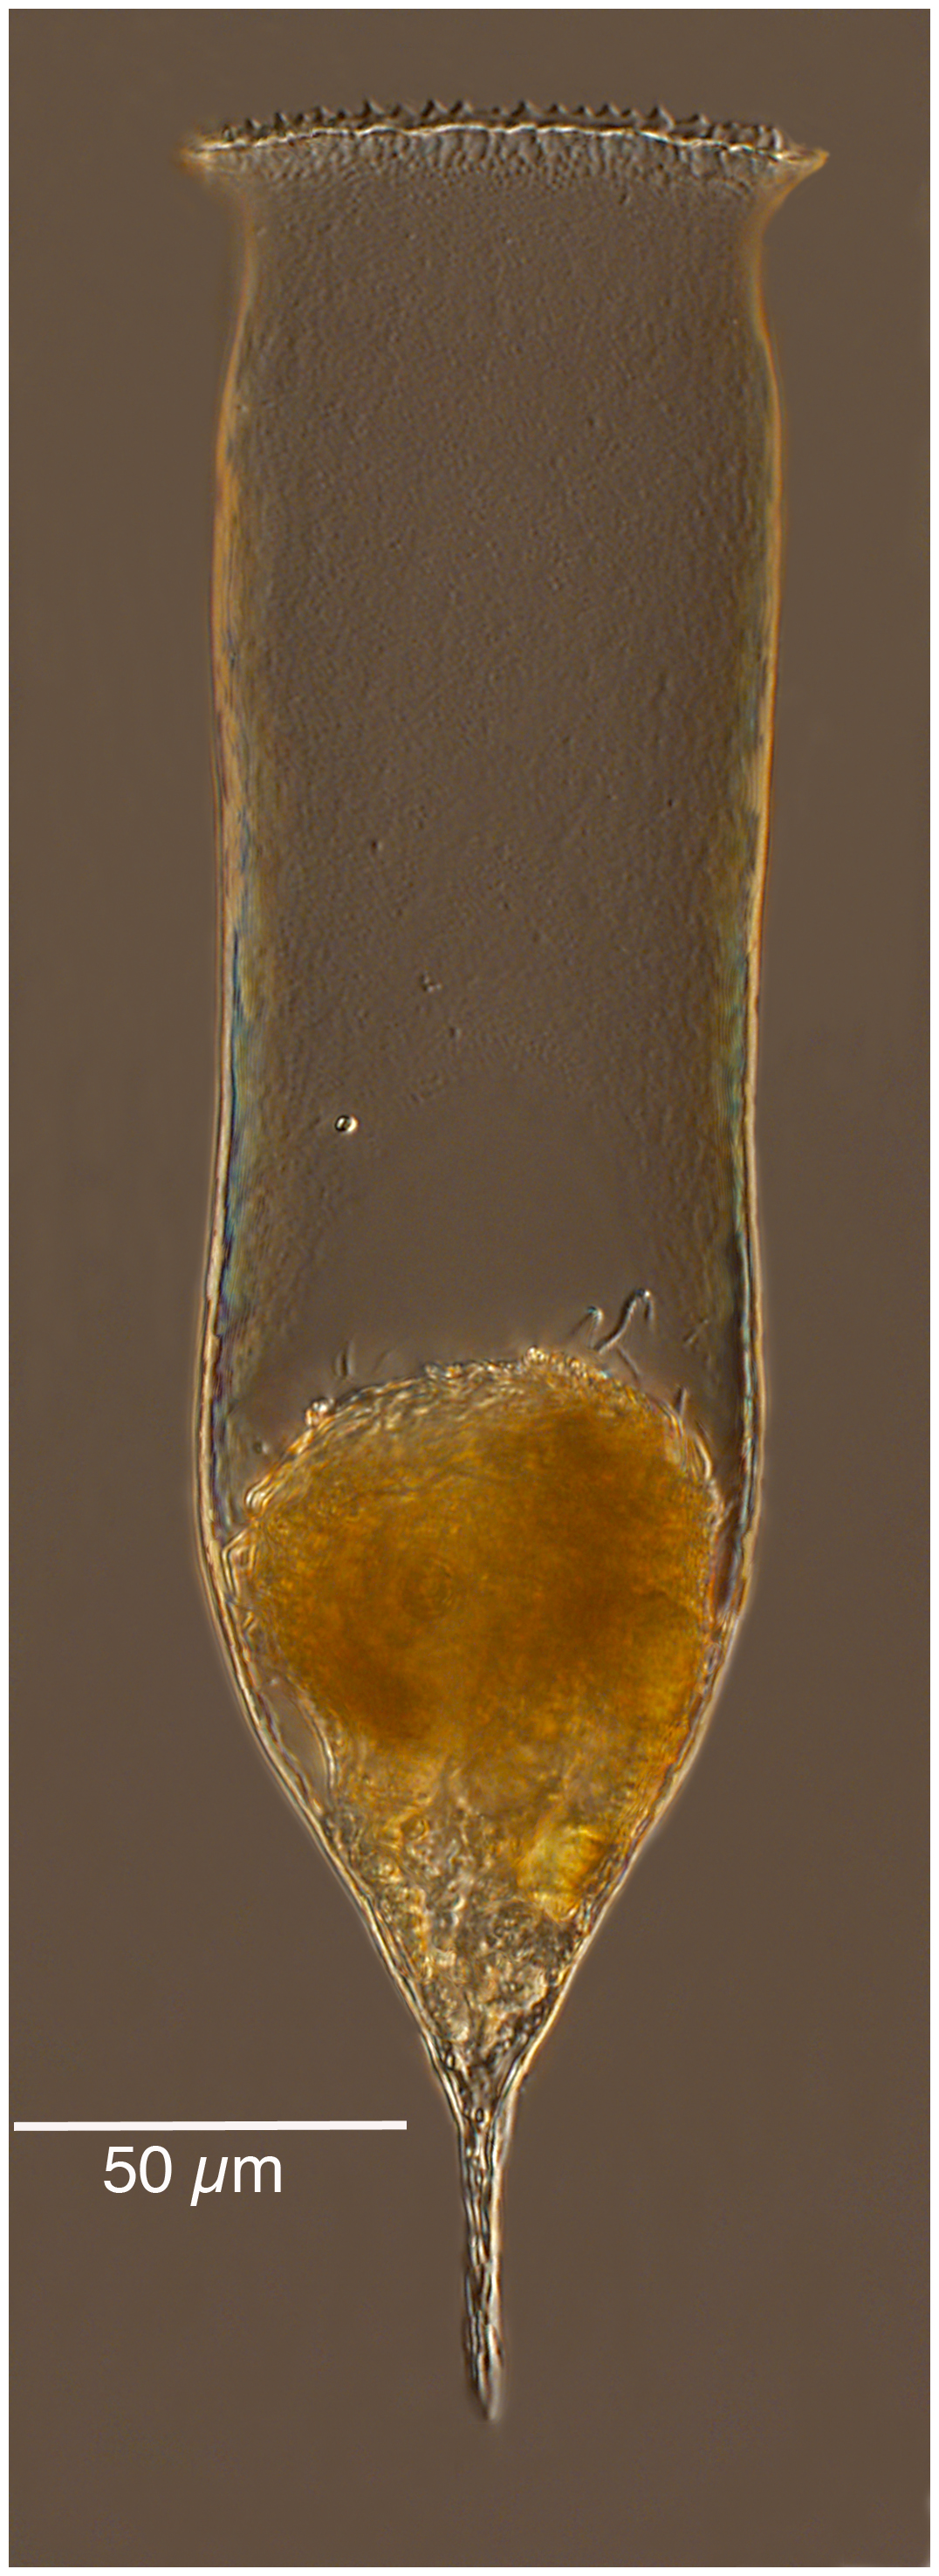 Cymatocylis cylindrica